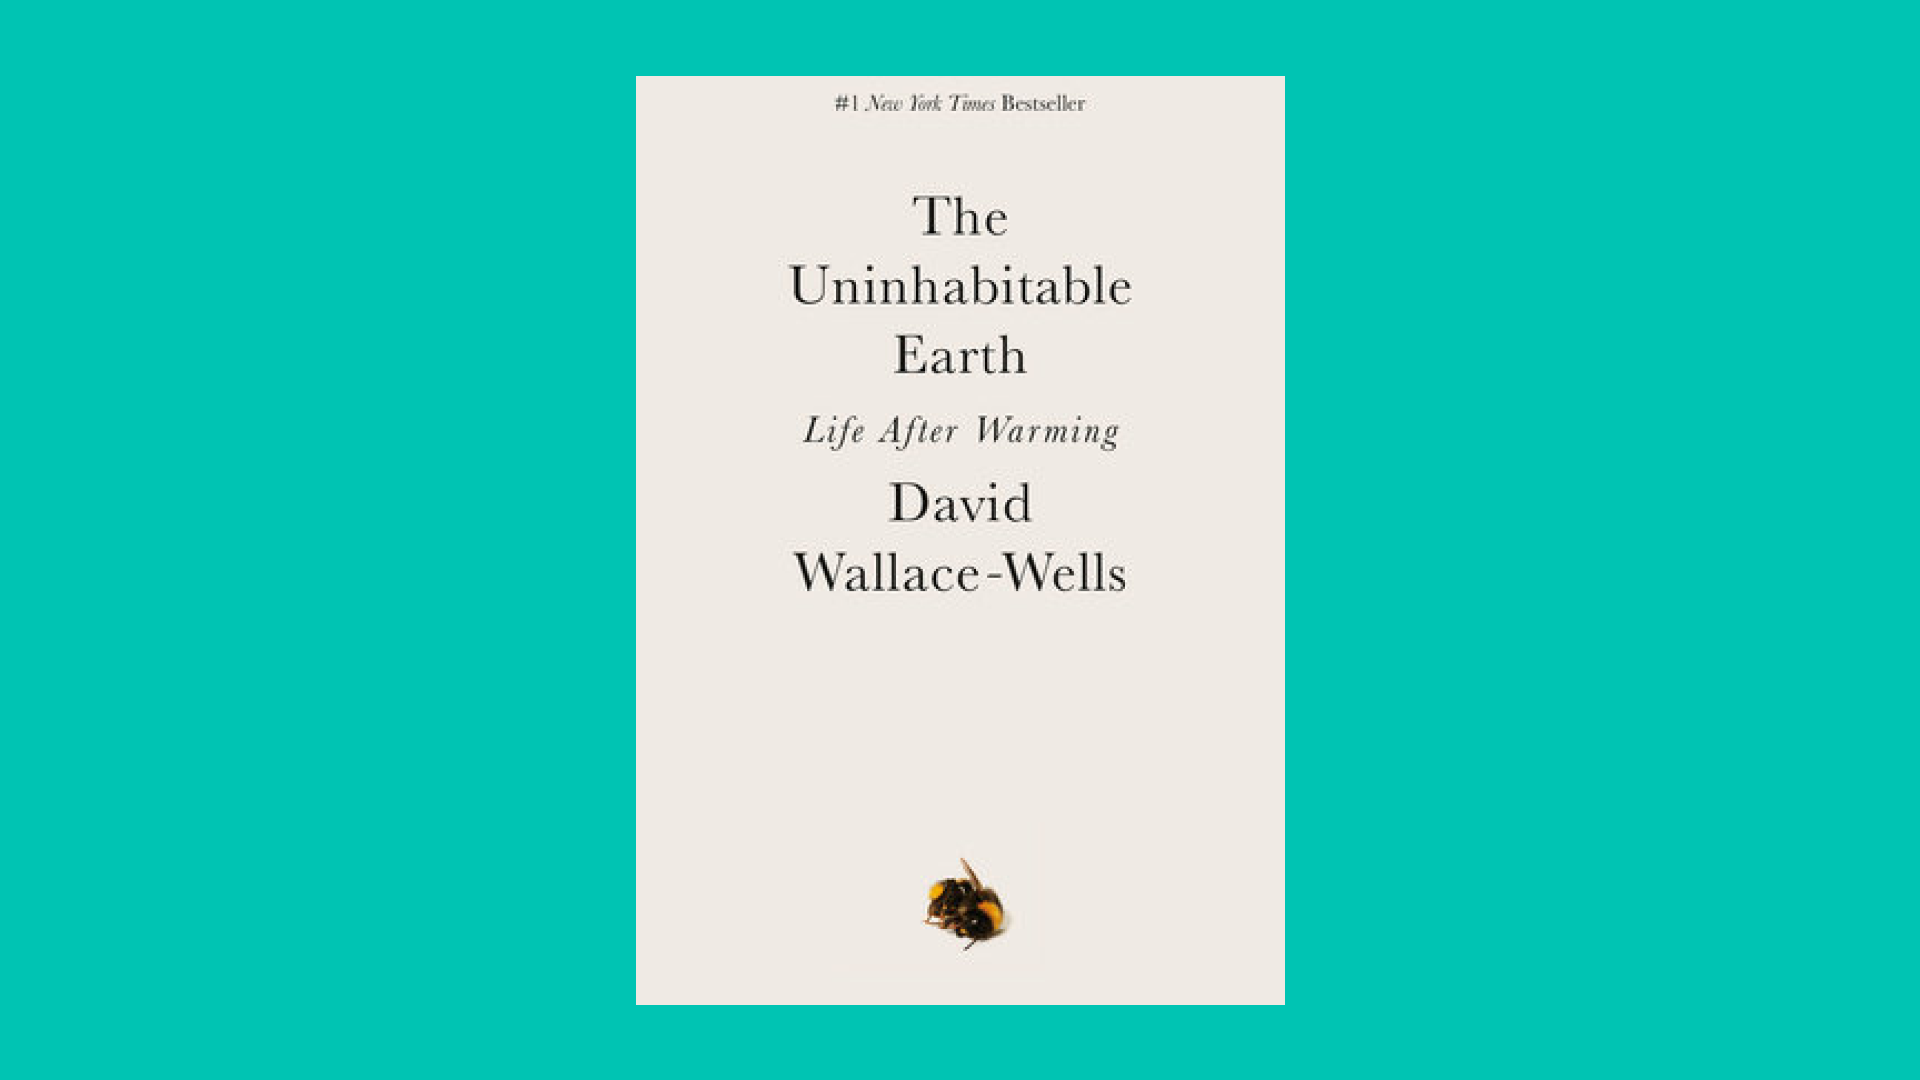 “The Uninhabitable Earth” by David Wallace-Wells